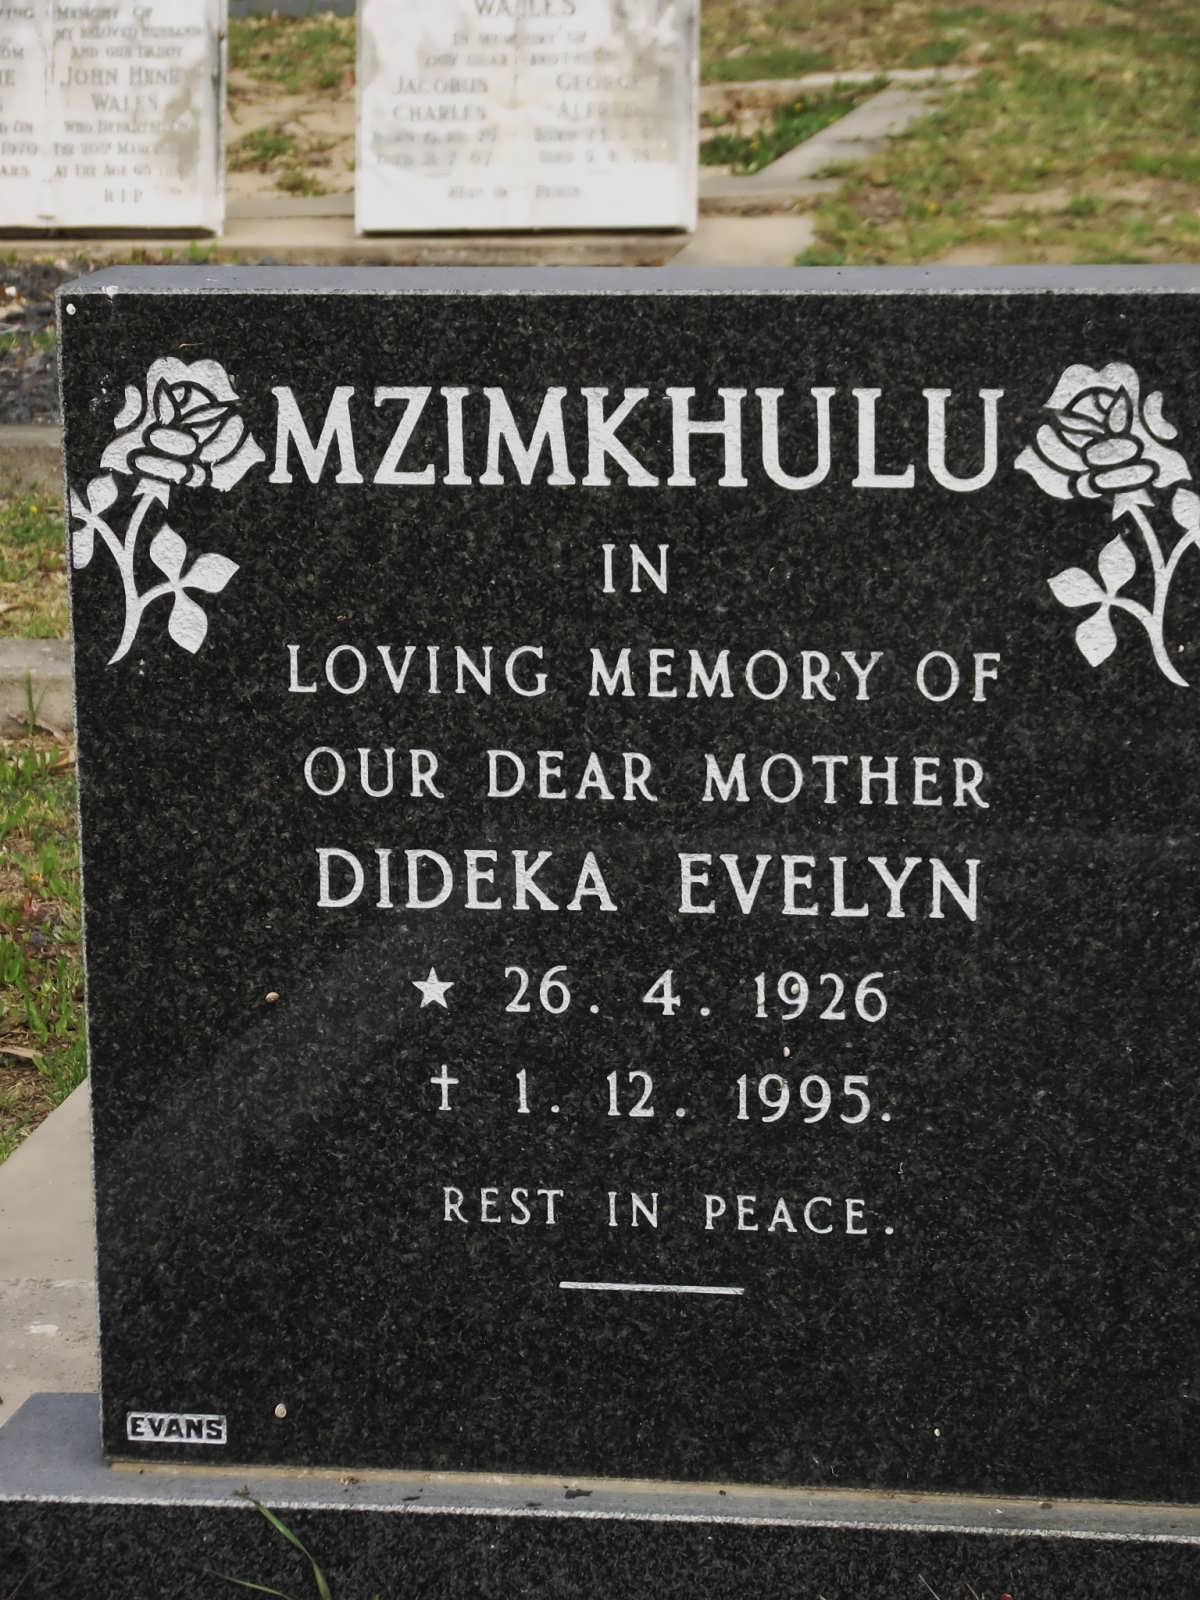 MZIMKHULU Dideka Evelyn 1926-1995